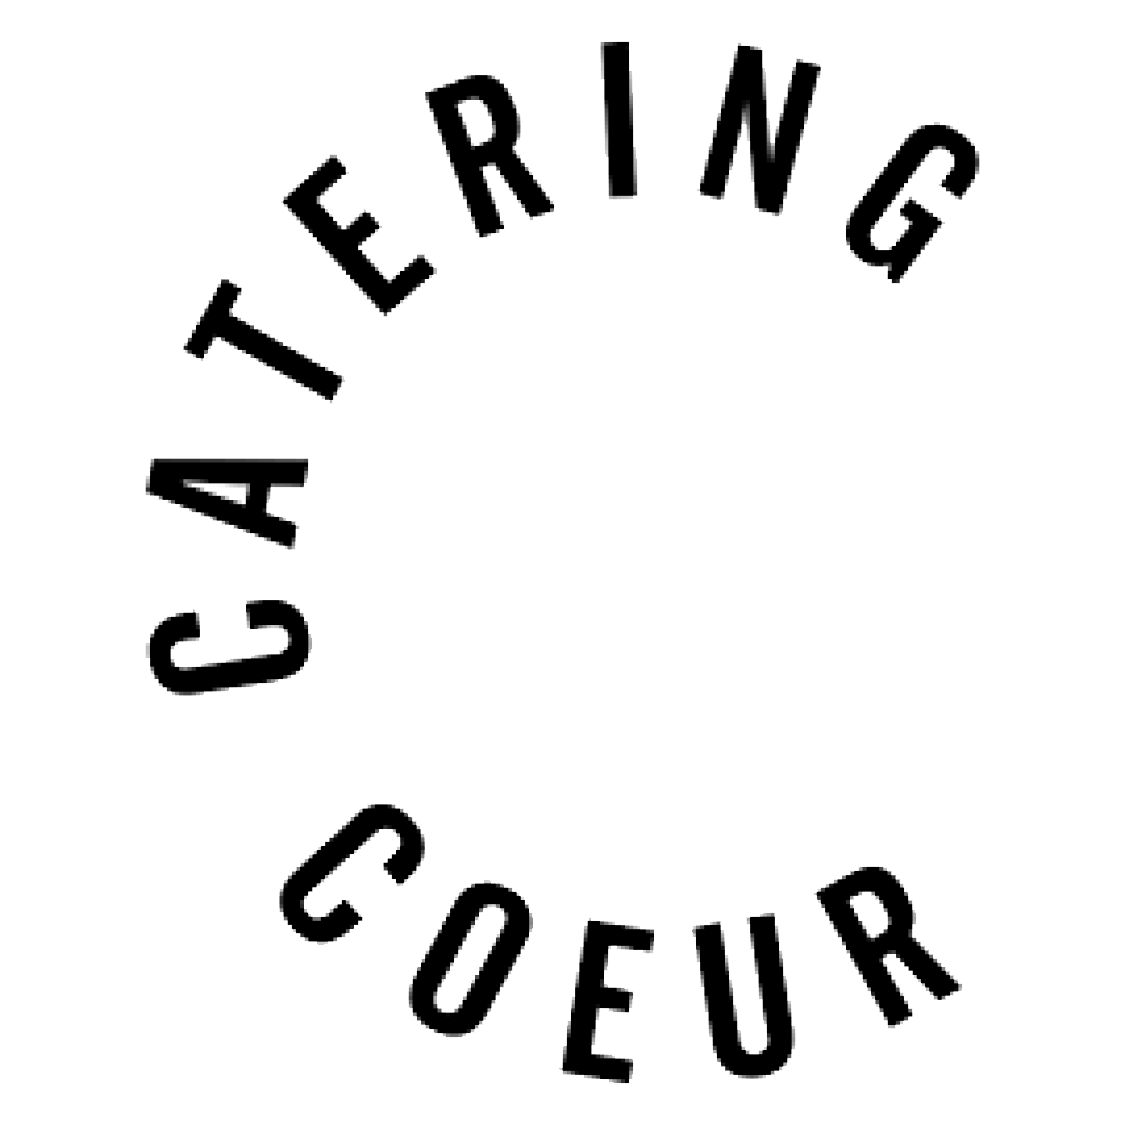 Coeur catering logo